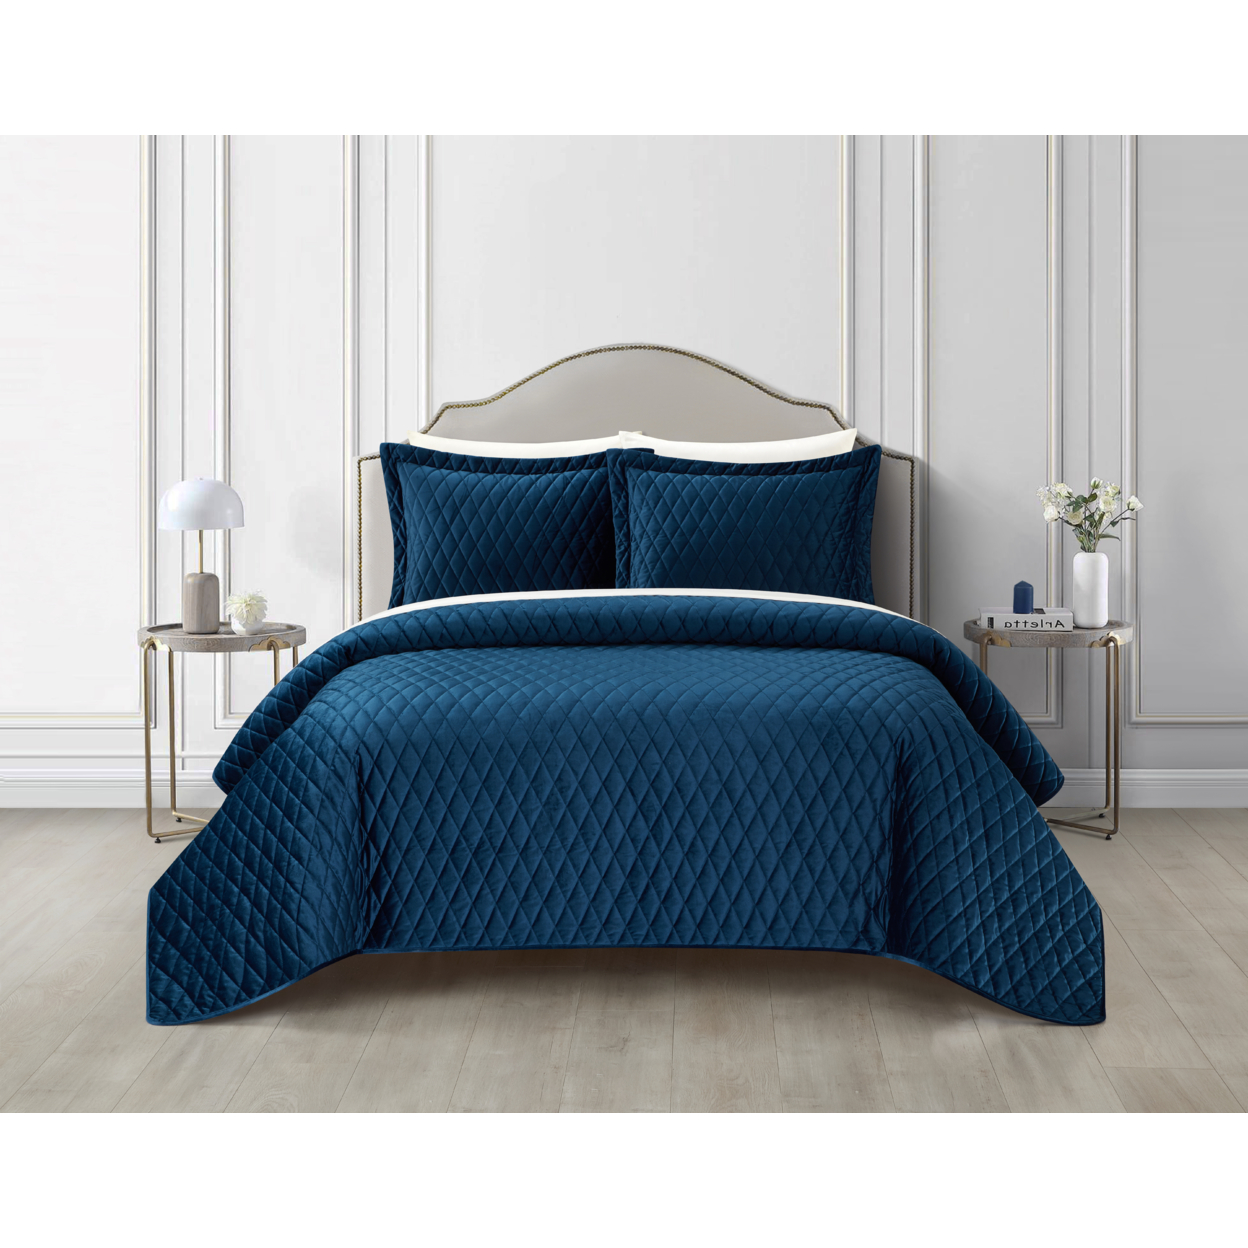 NY&C Home Dafa 3 Piece Velvet Quilt Set Diamond Stitched Pattern Bedding - Blue, Queen